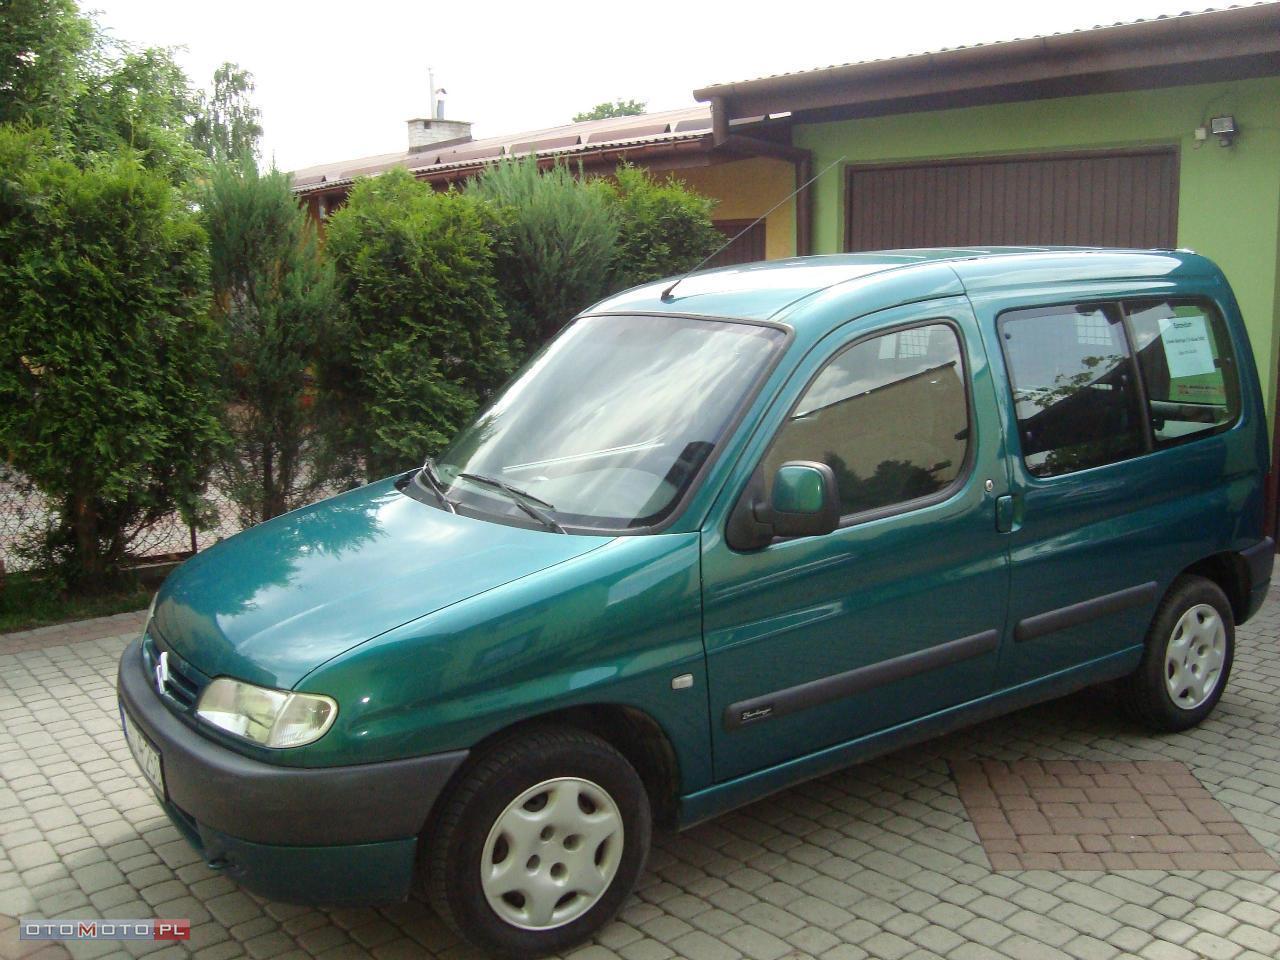 Citroën Berlingo 2002, I właściciel, 1,9 Diesel